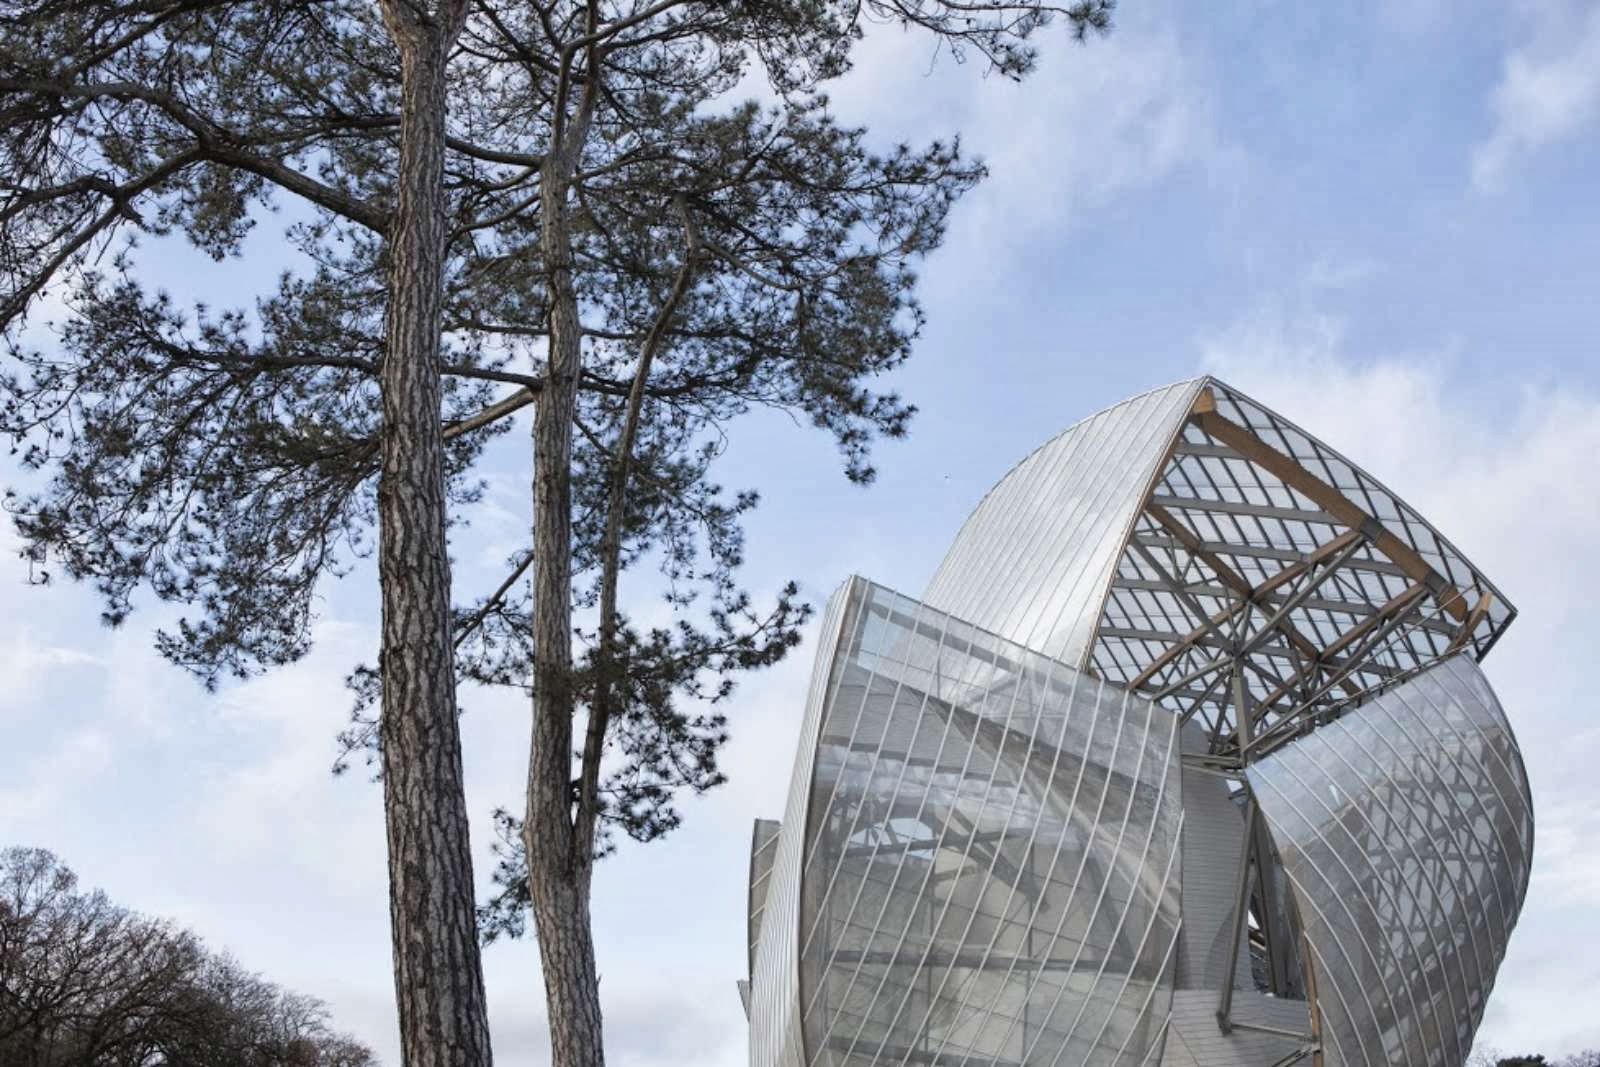 Fondation Louis Vuitton, Building in Paris by Frank Gehry - Con l